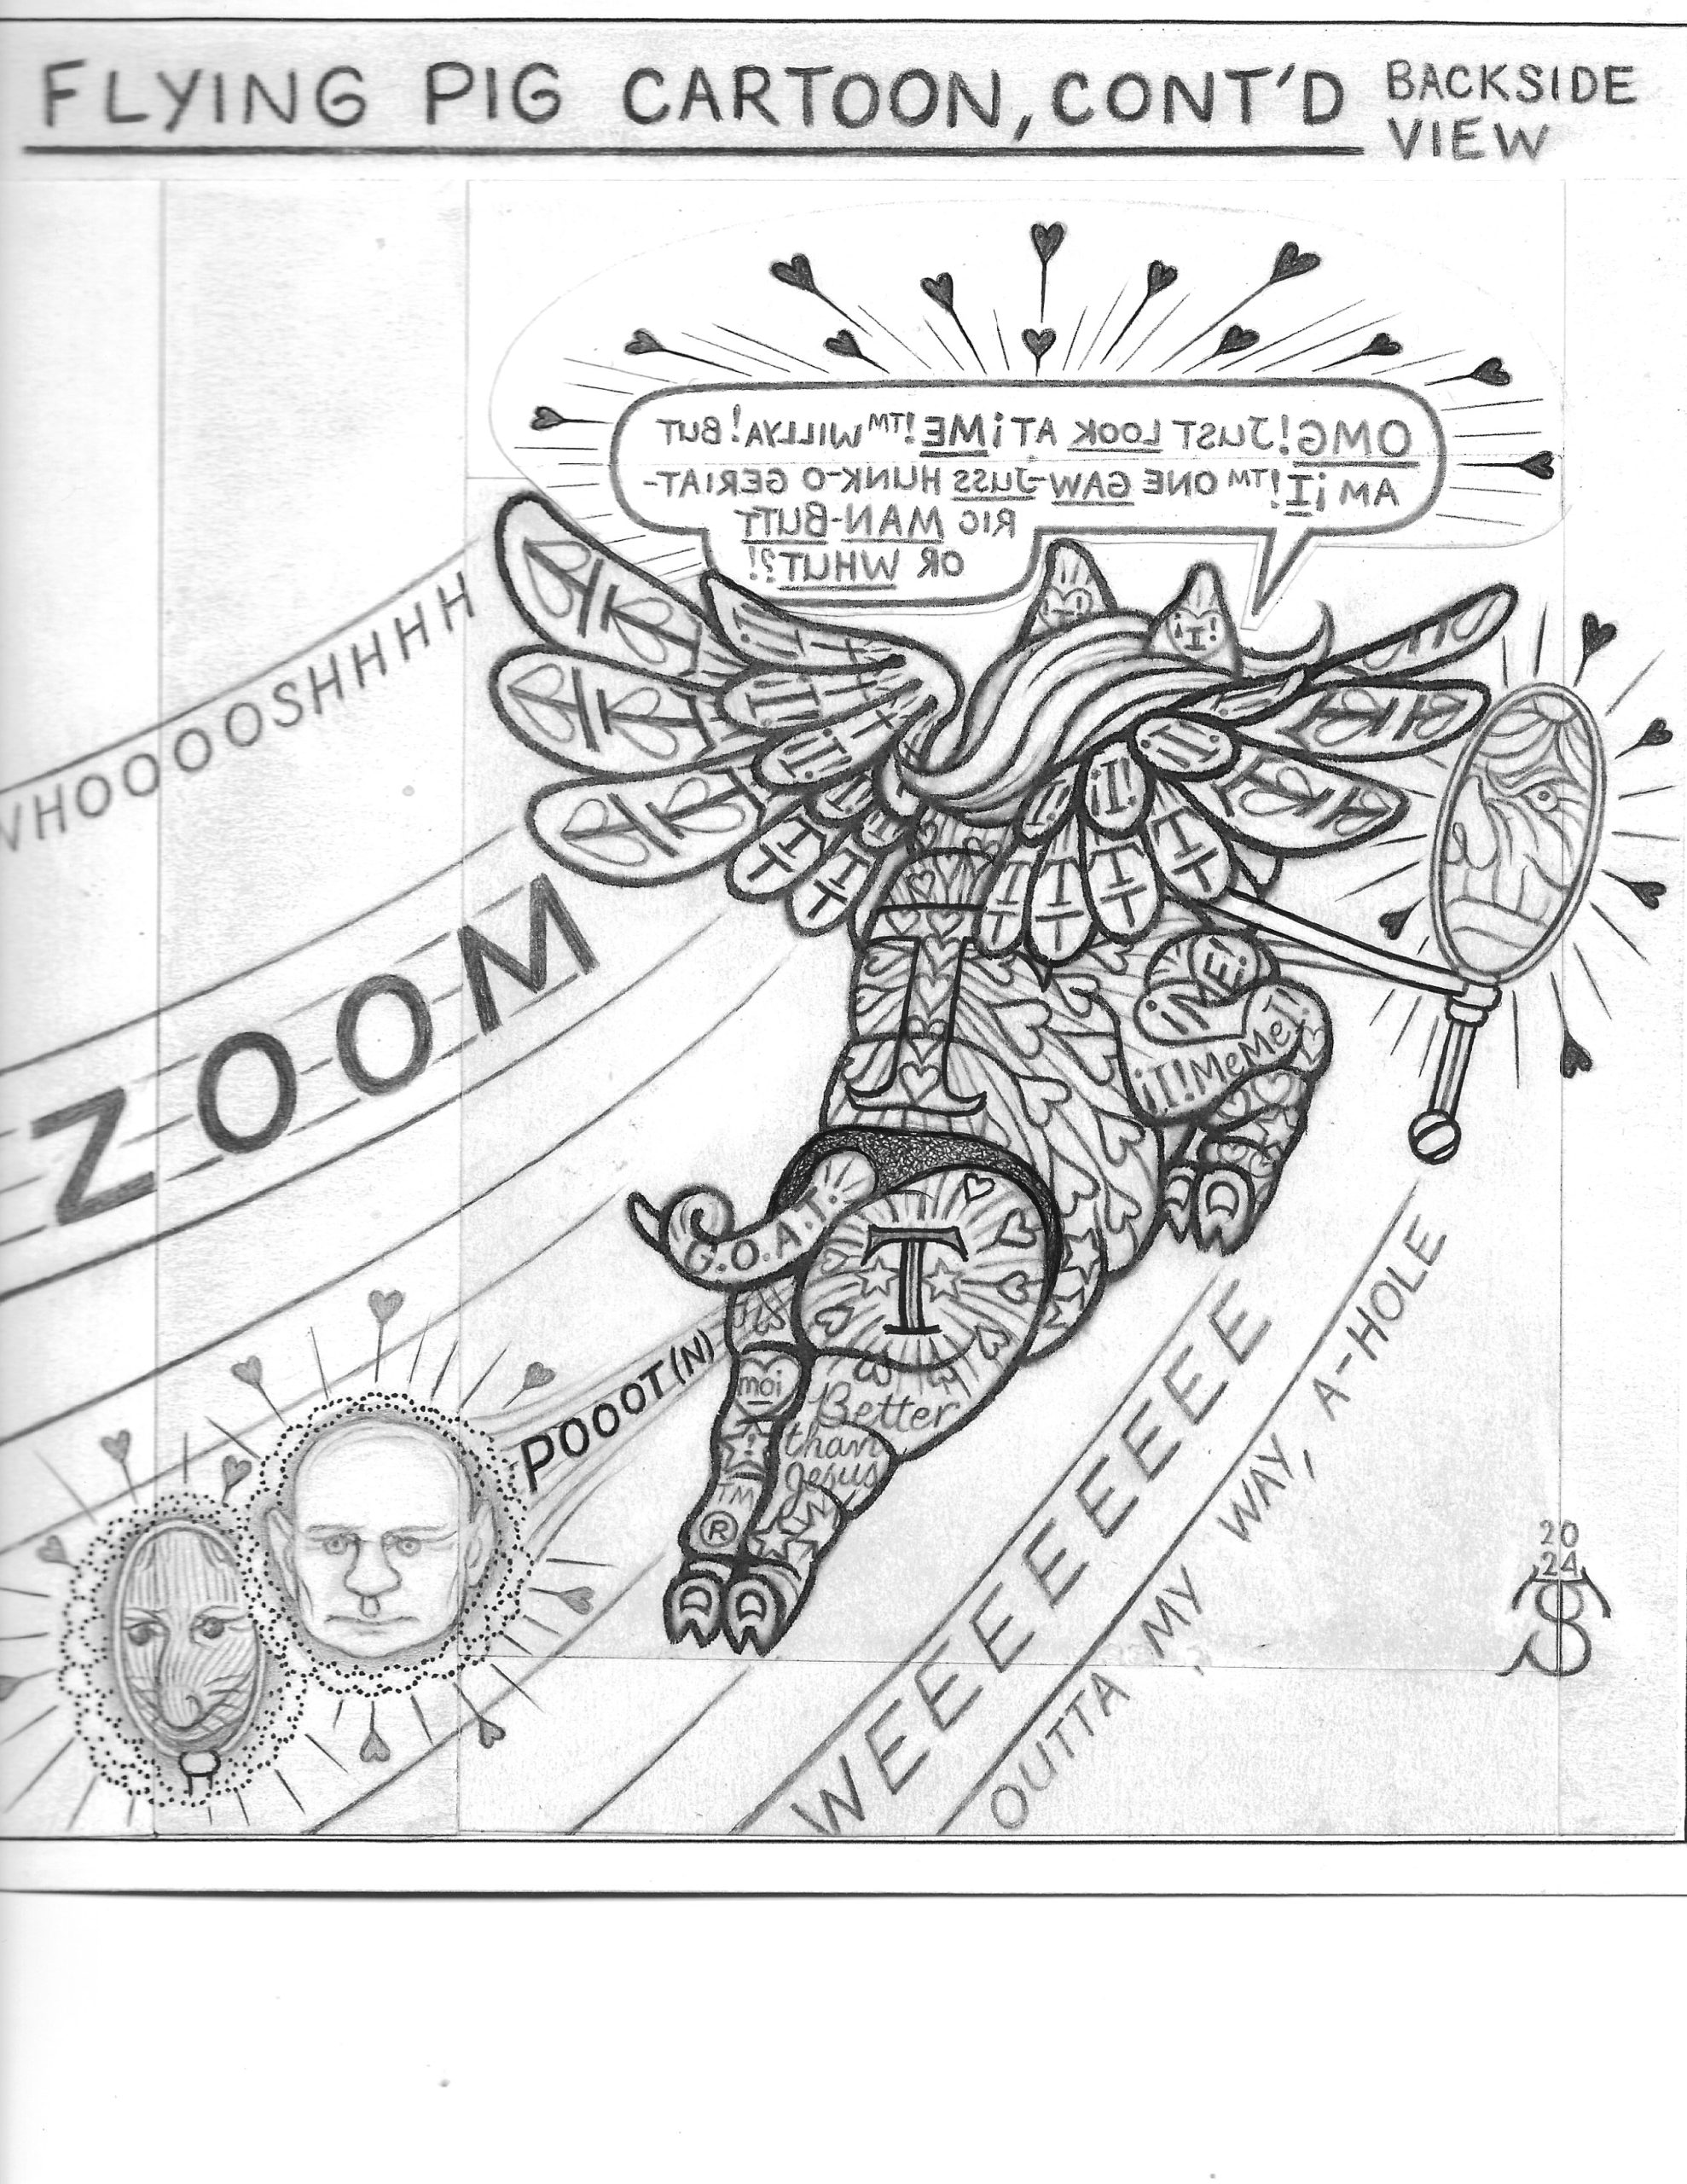 A political cartoon depicting Donald Trump as a flying pig powered by Vladimir-Putin-farts